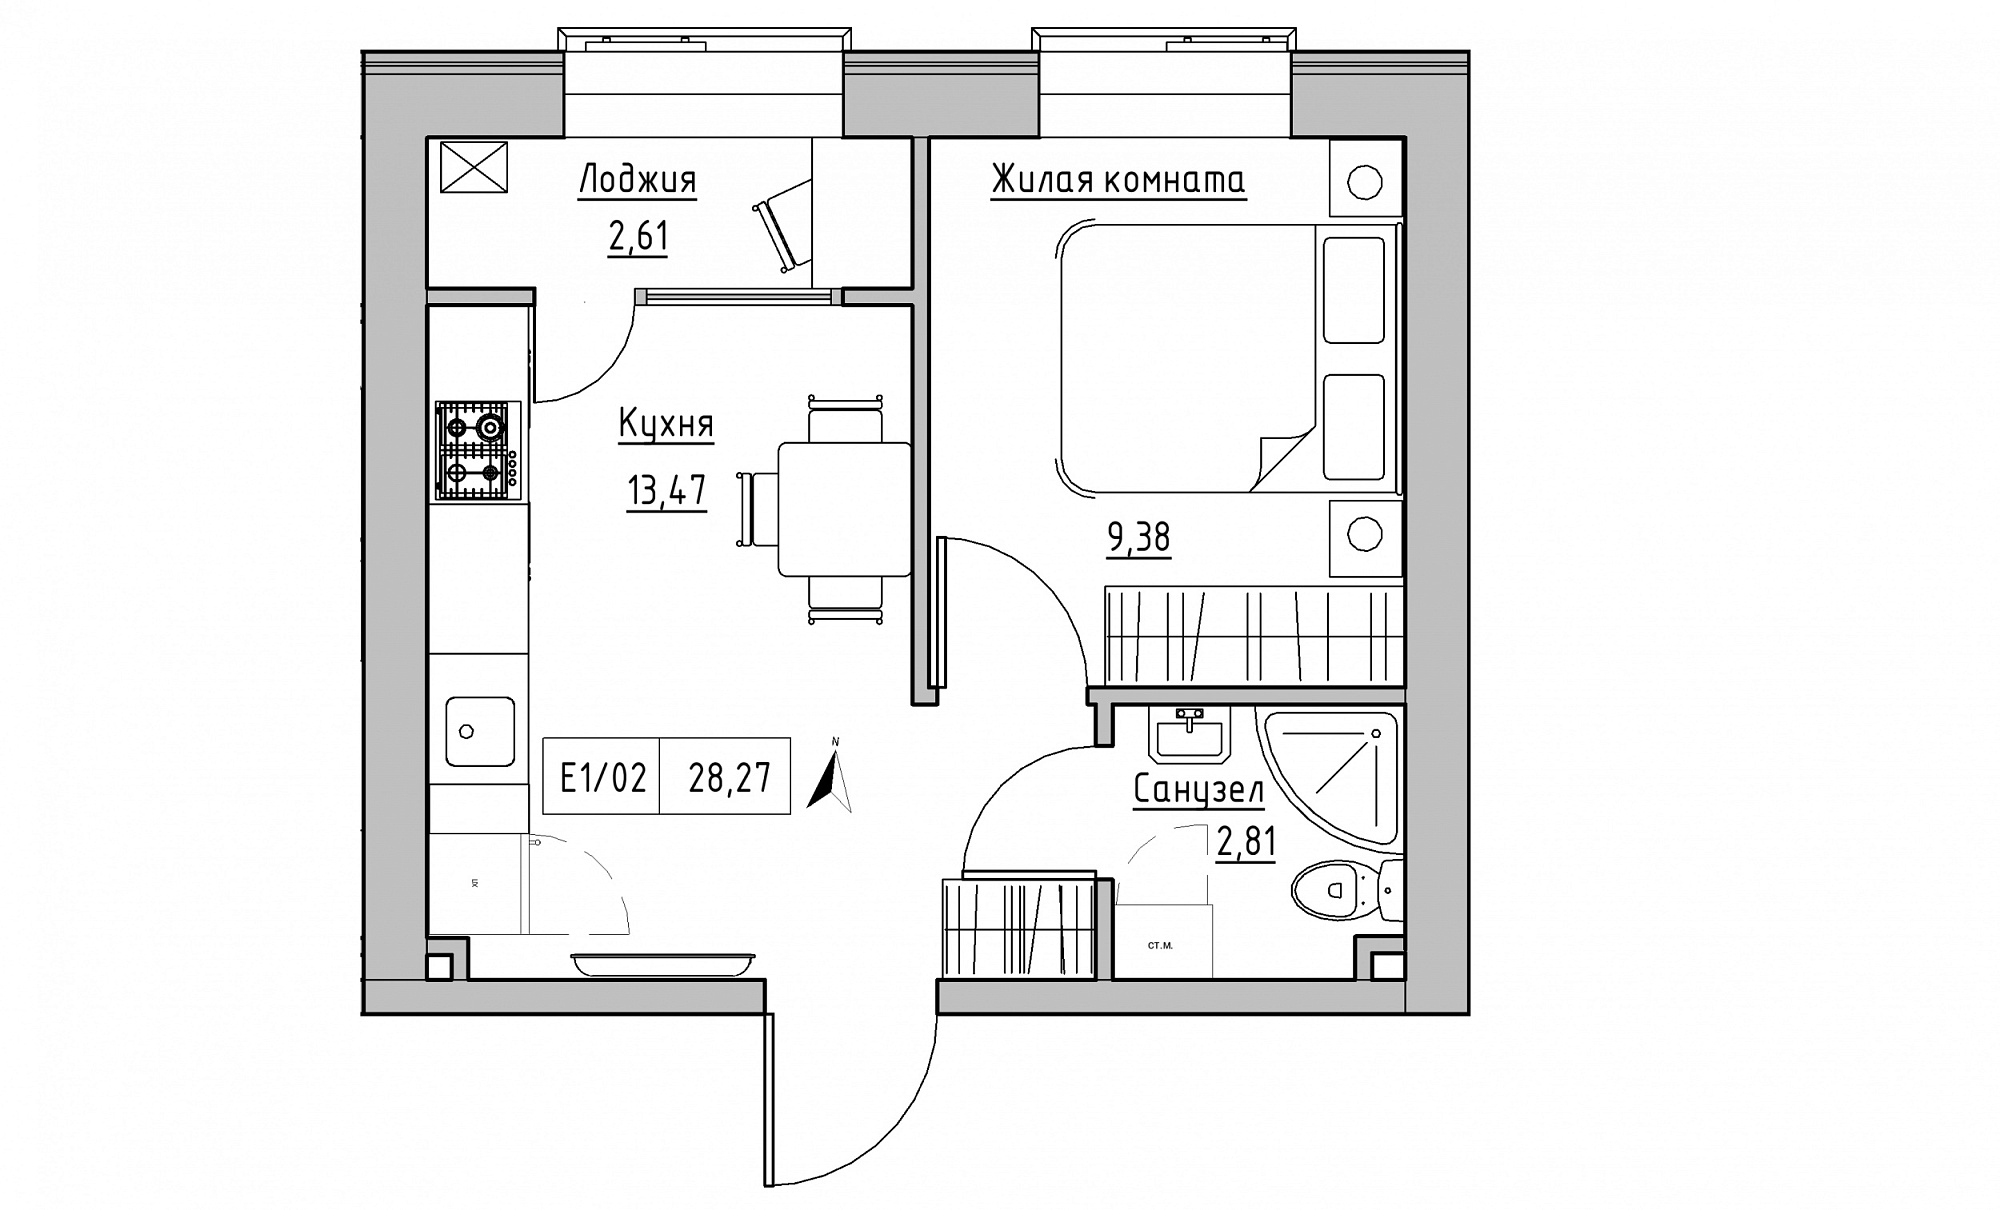 Planning 1-rm flats area 28.27m2, KS-015-03/0015.